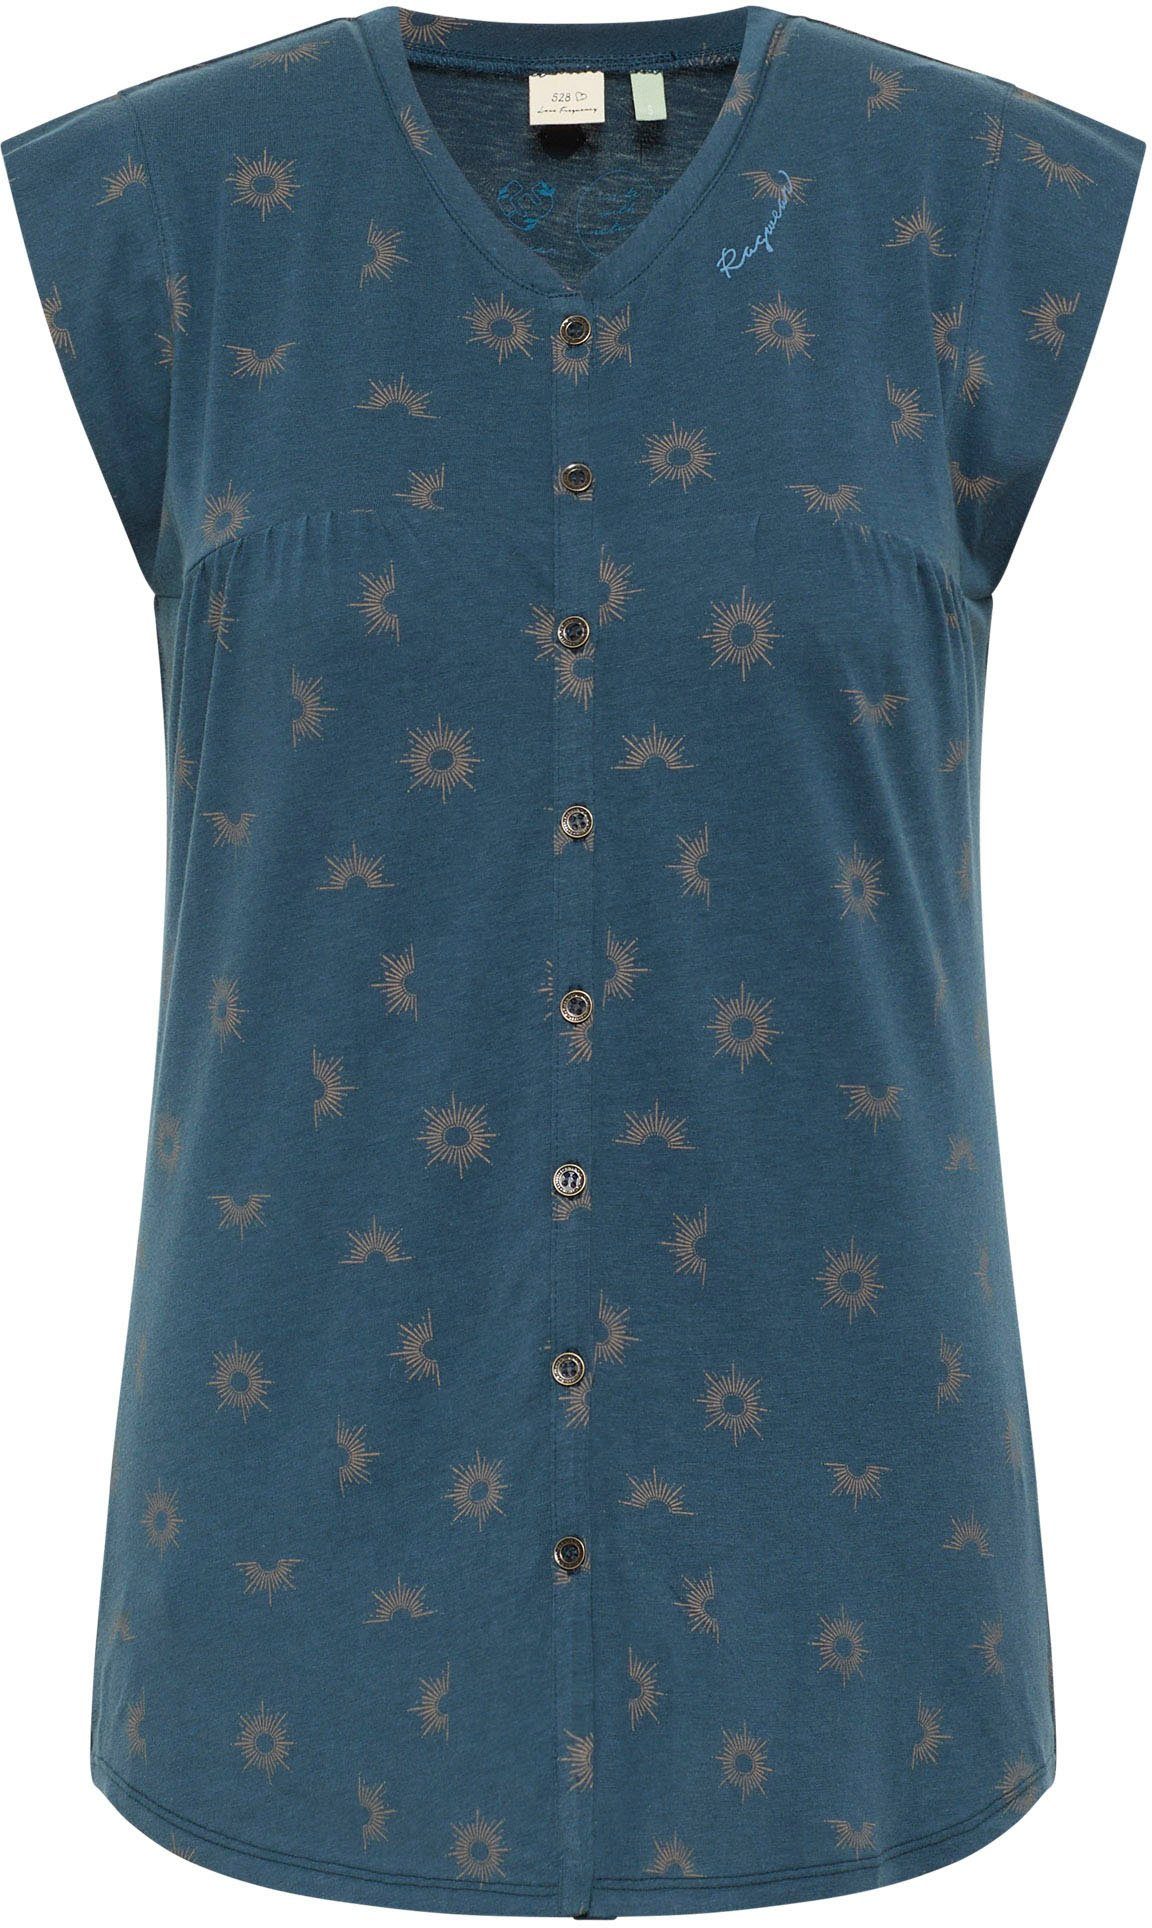 ZOFKA Ragwear PETROL Kurzarmshirt ORGANIC in stylischem Allover-Sunshine-Print